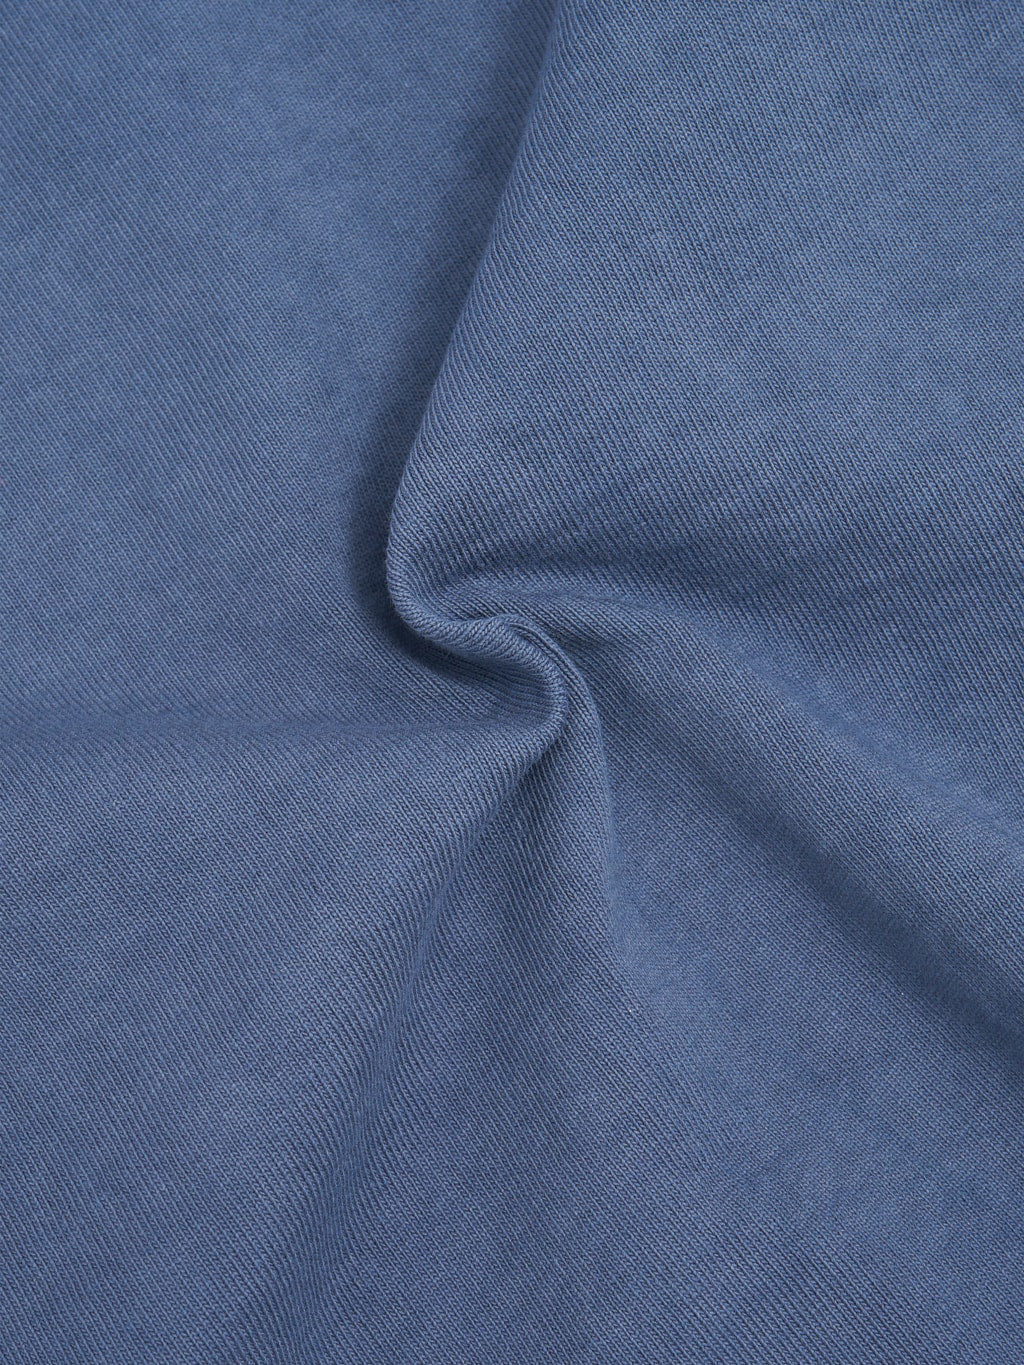 jackman dotsume tshirt off classic blue texture